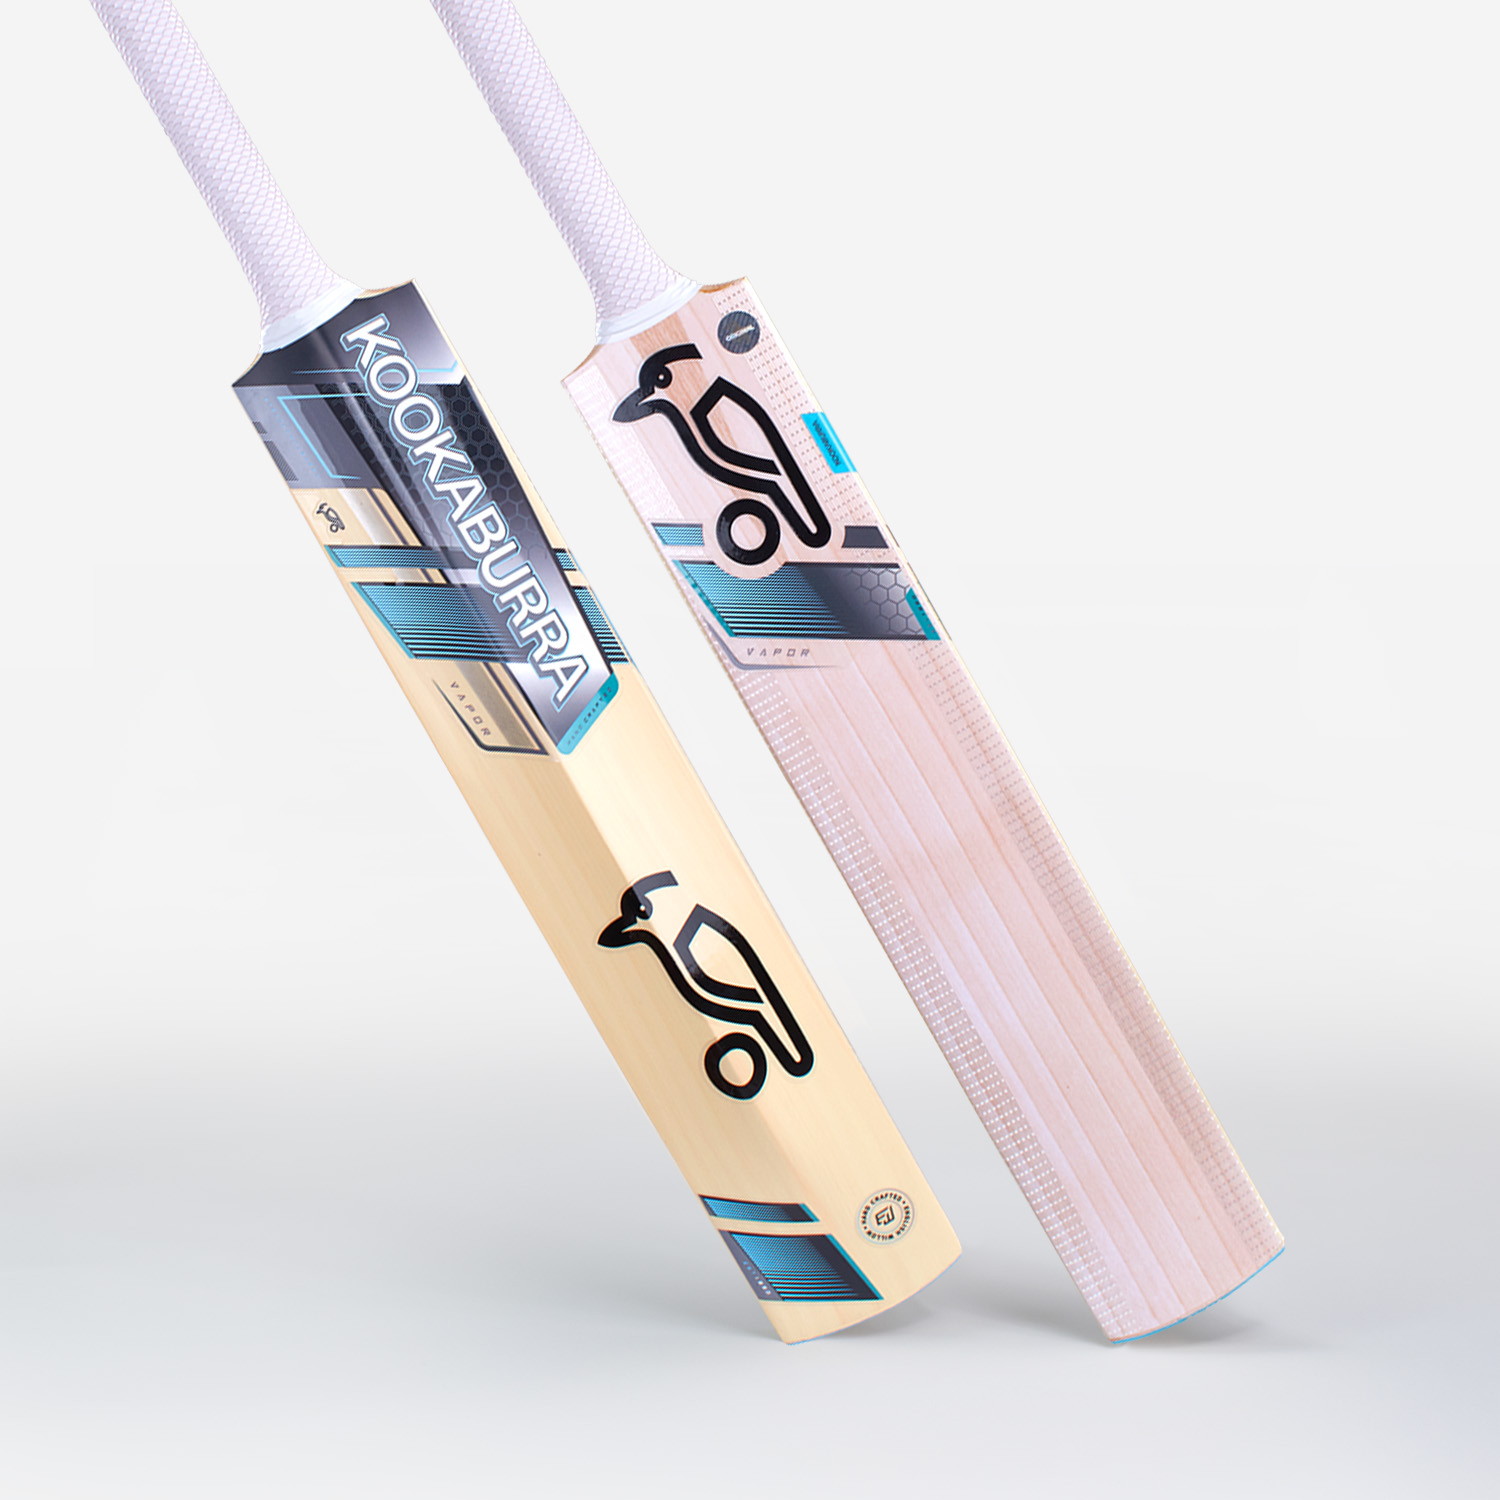 2023 Kookaburra Vapor 5.1 Cricket bat